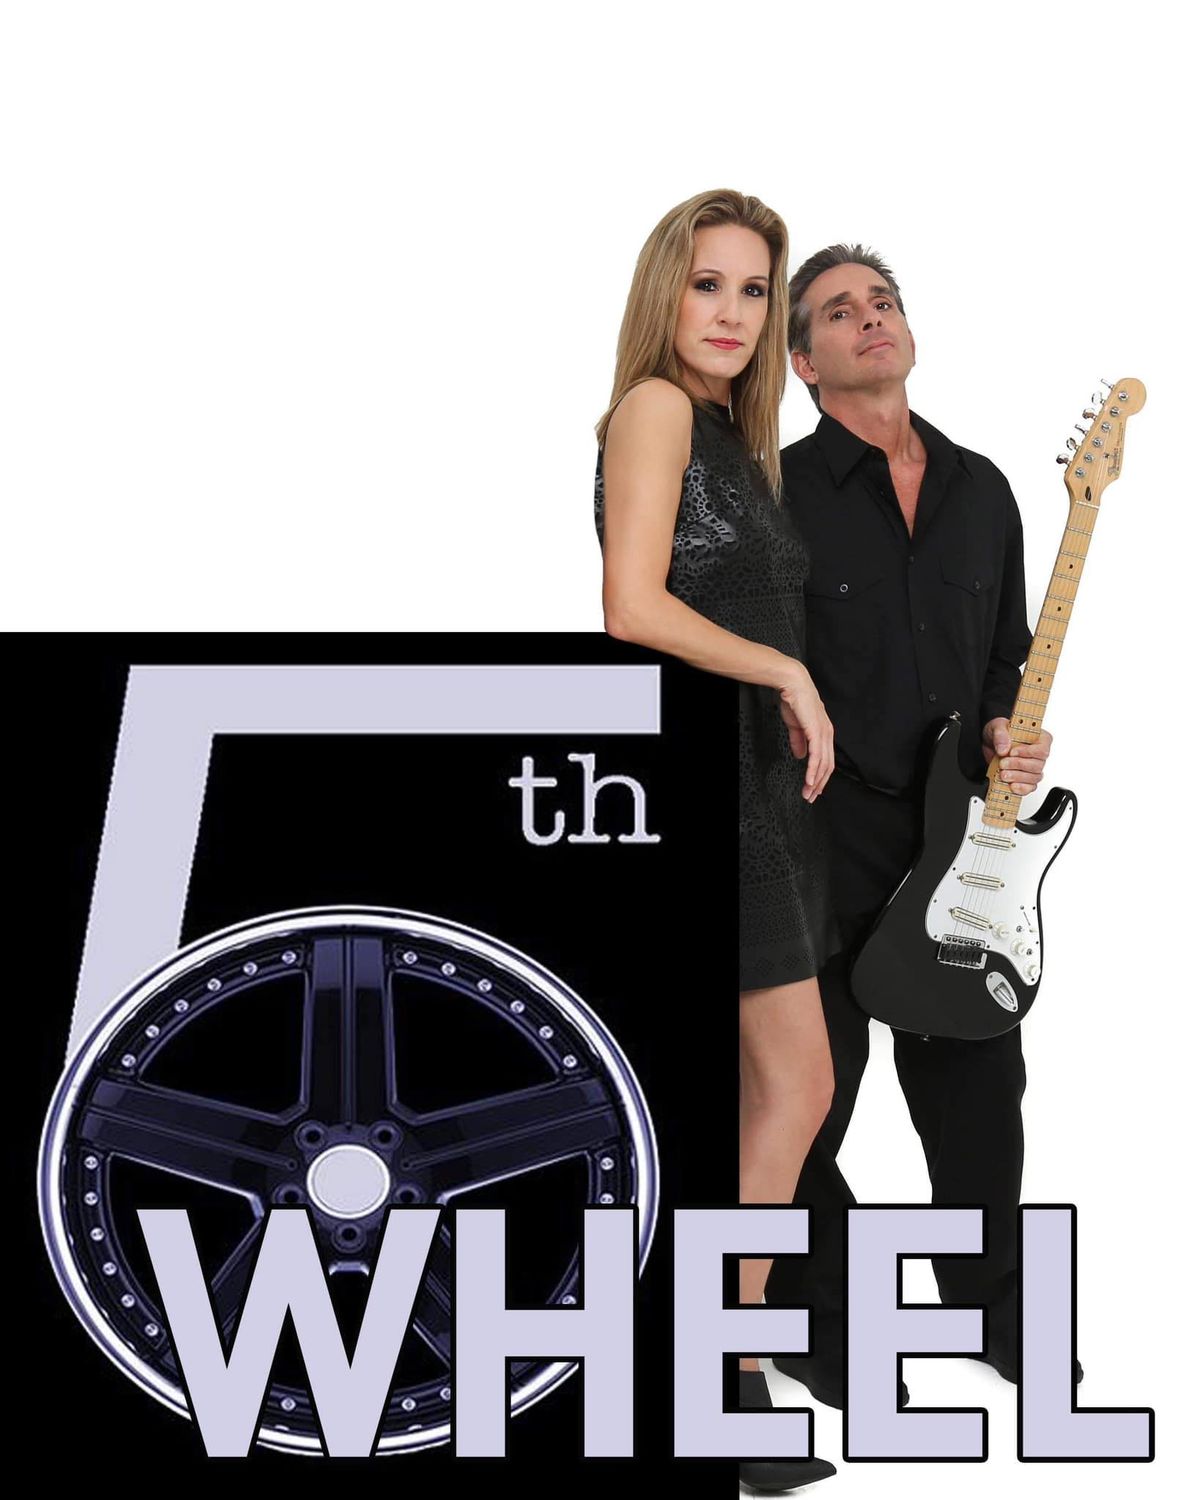 Fifth Wheel Duo returns to Rock & Brews